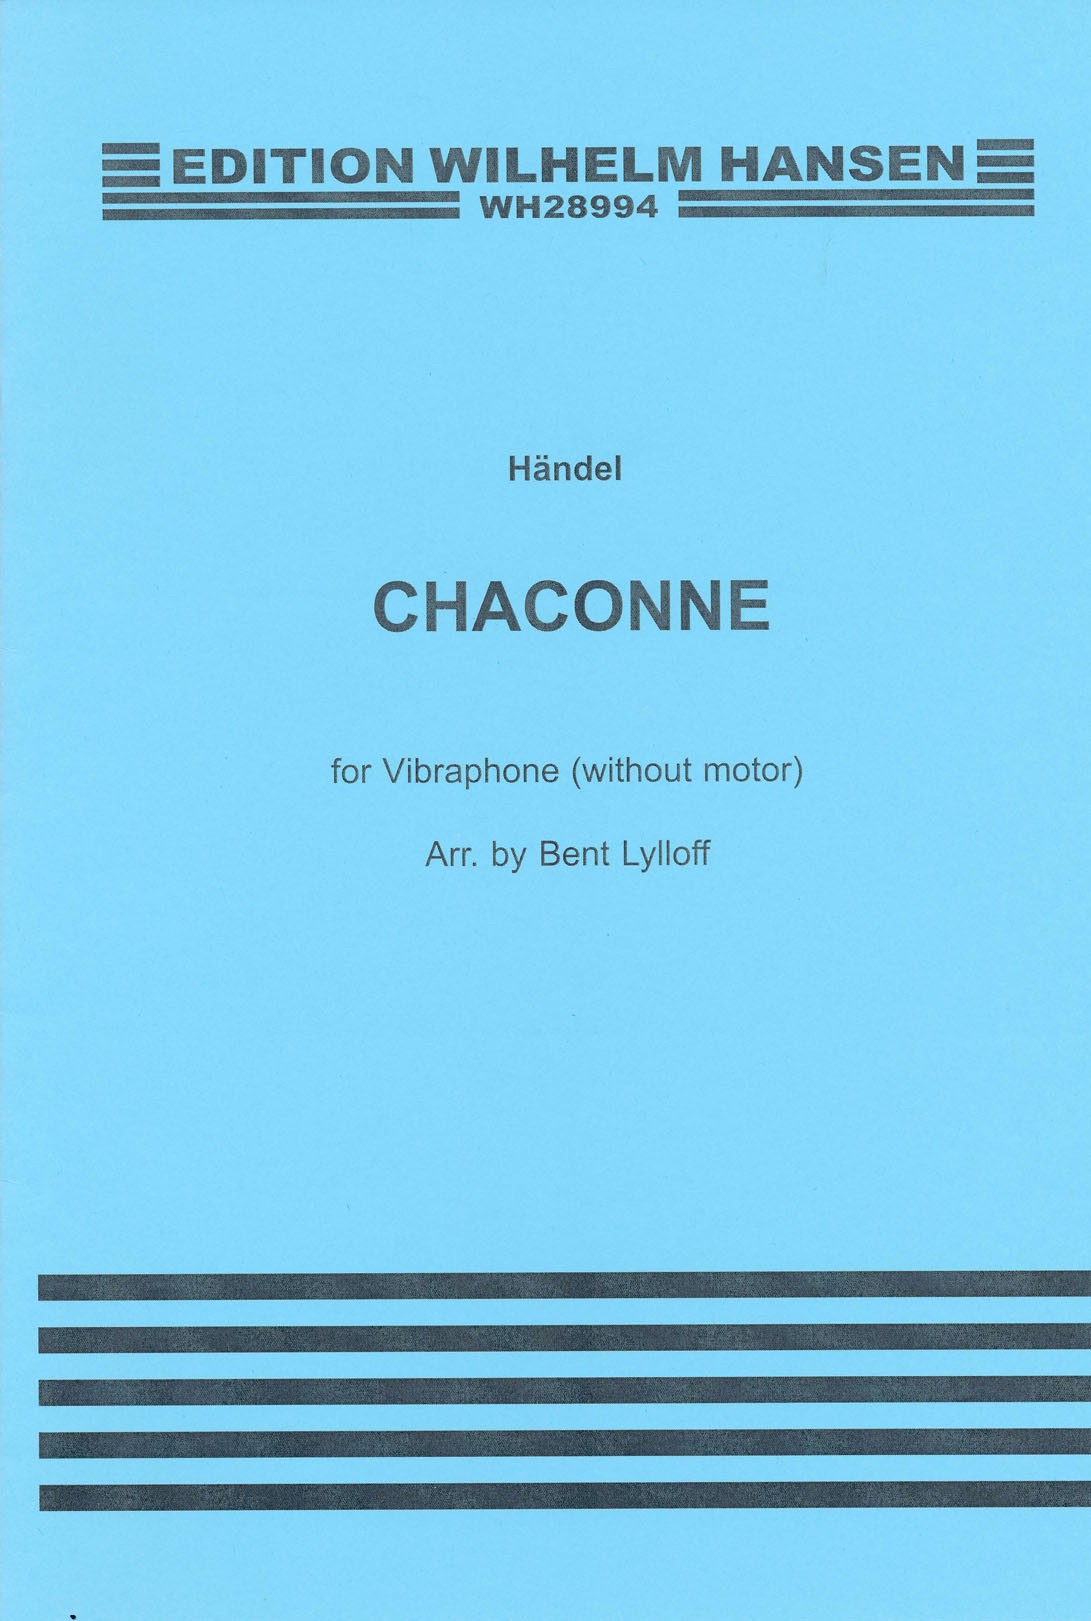 Chaconne by Handel arr. Bent Lylloff